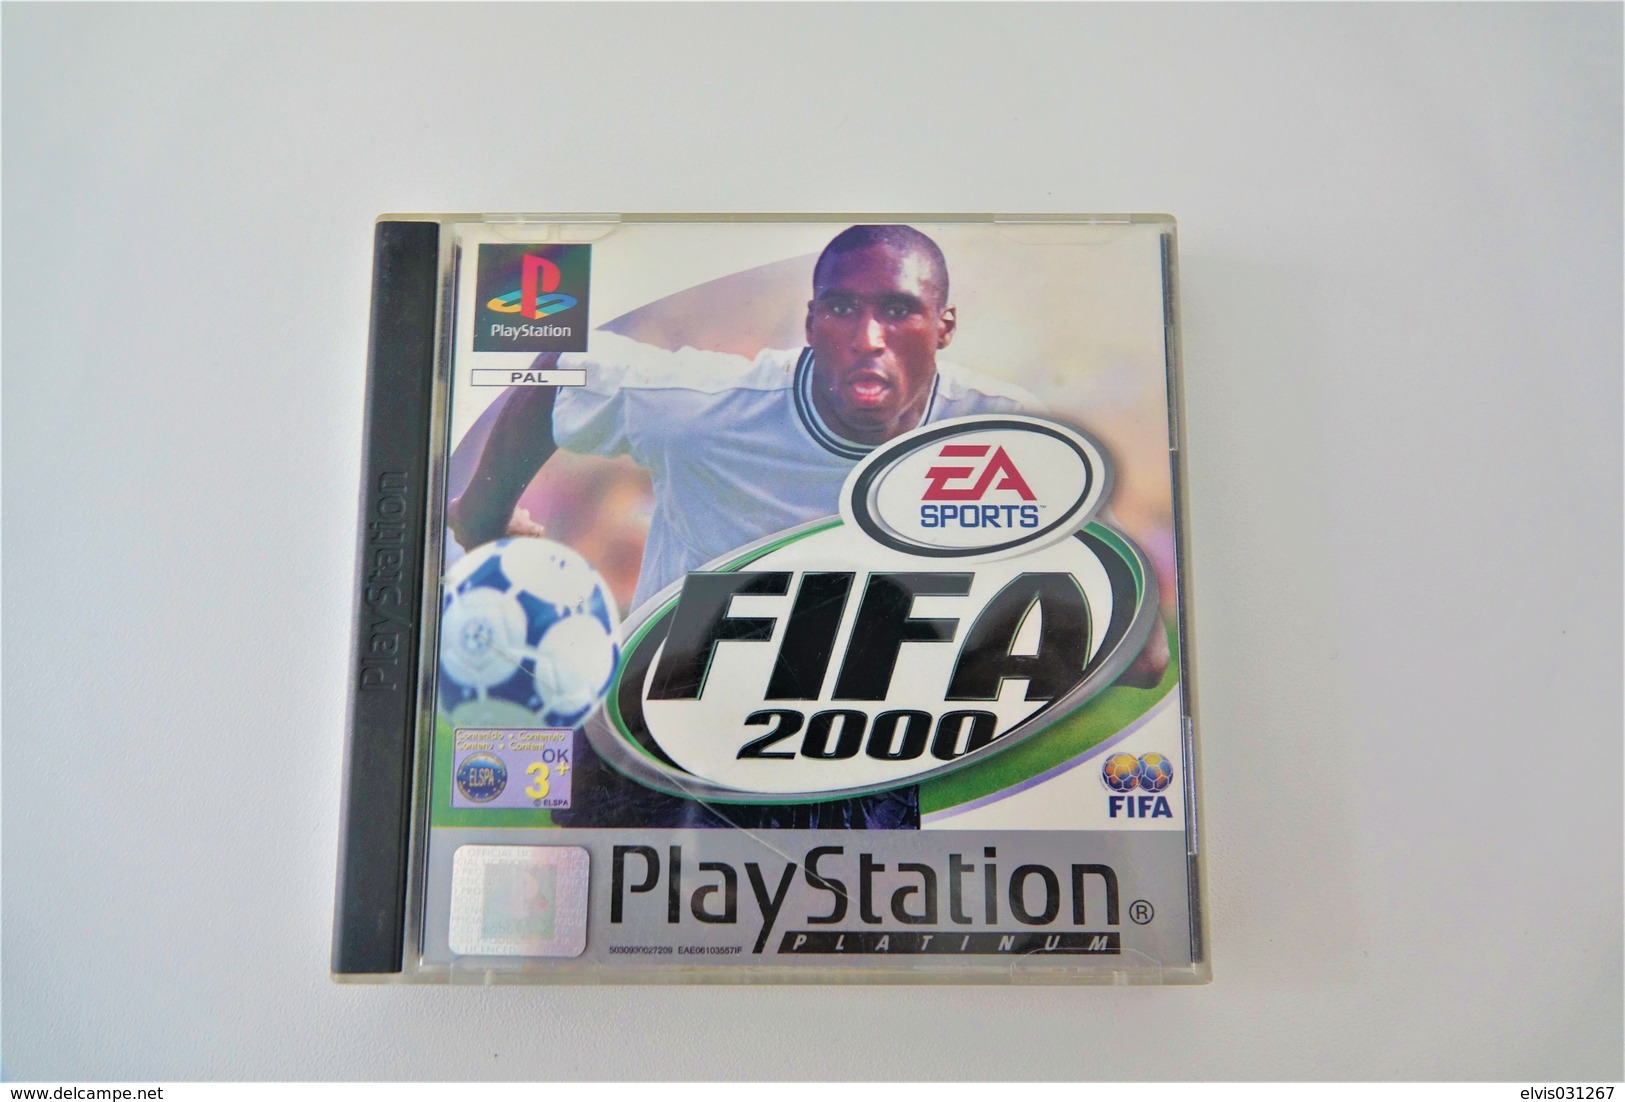 SONY PLAYSTATION ONE PS1 : EA FIFA 2000 PLATINUM - Playstation